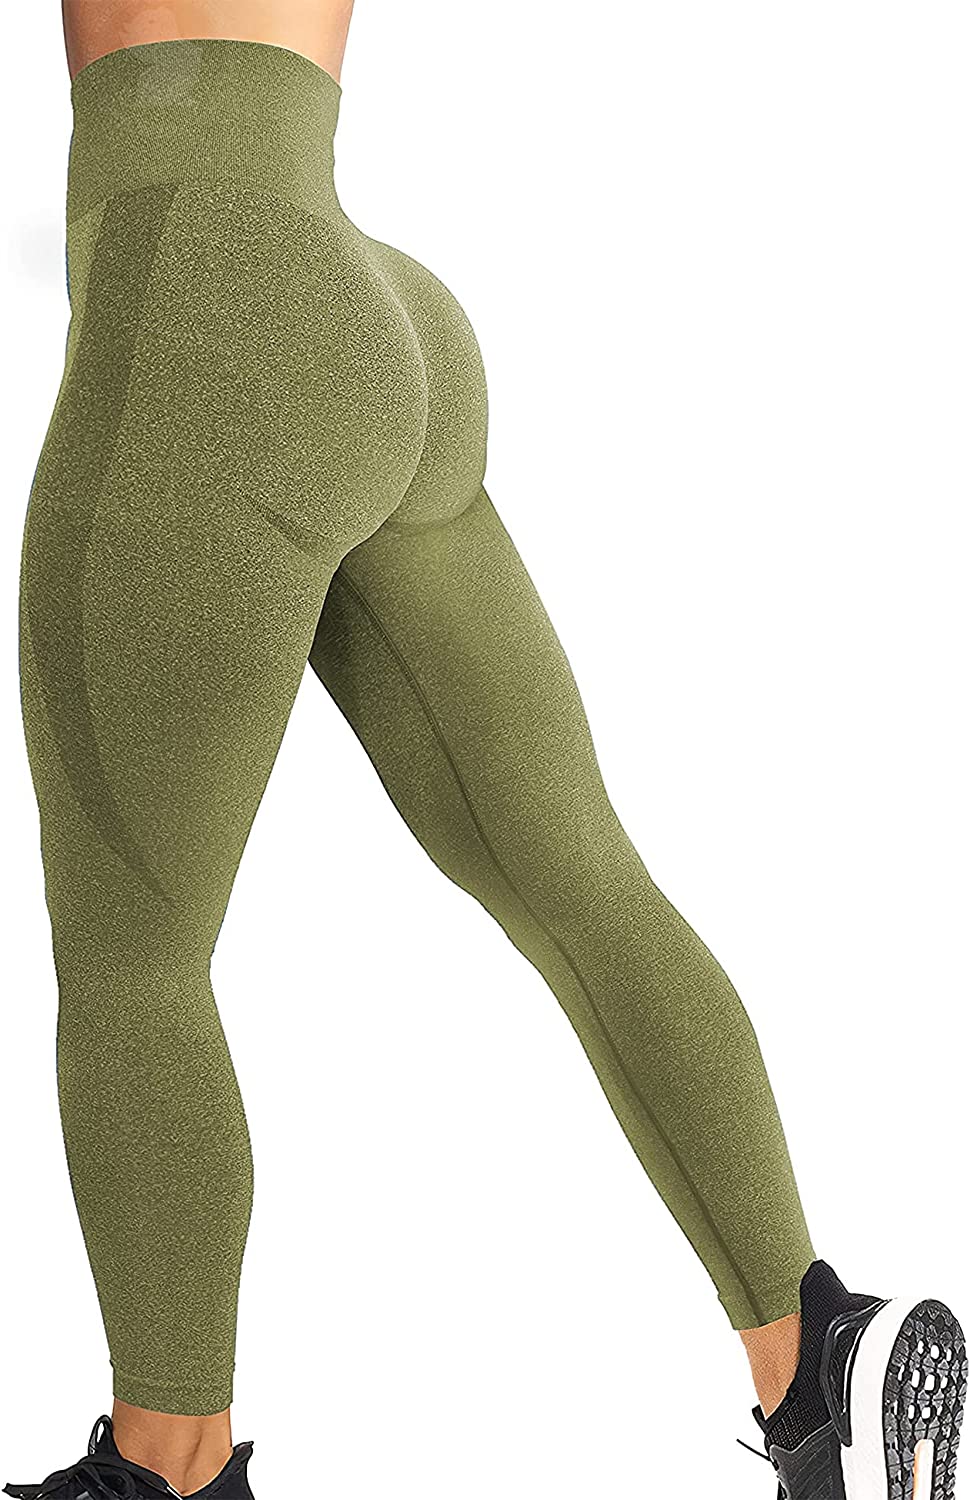 Paragon High Rise Best Friend Seamless Green Gym Yoga Pants